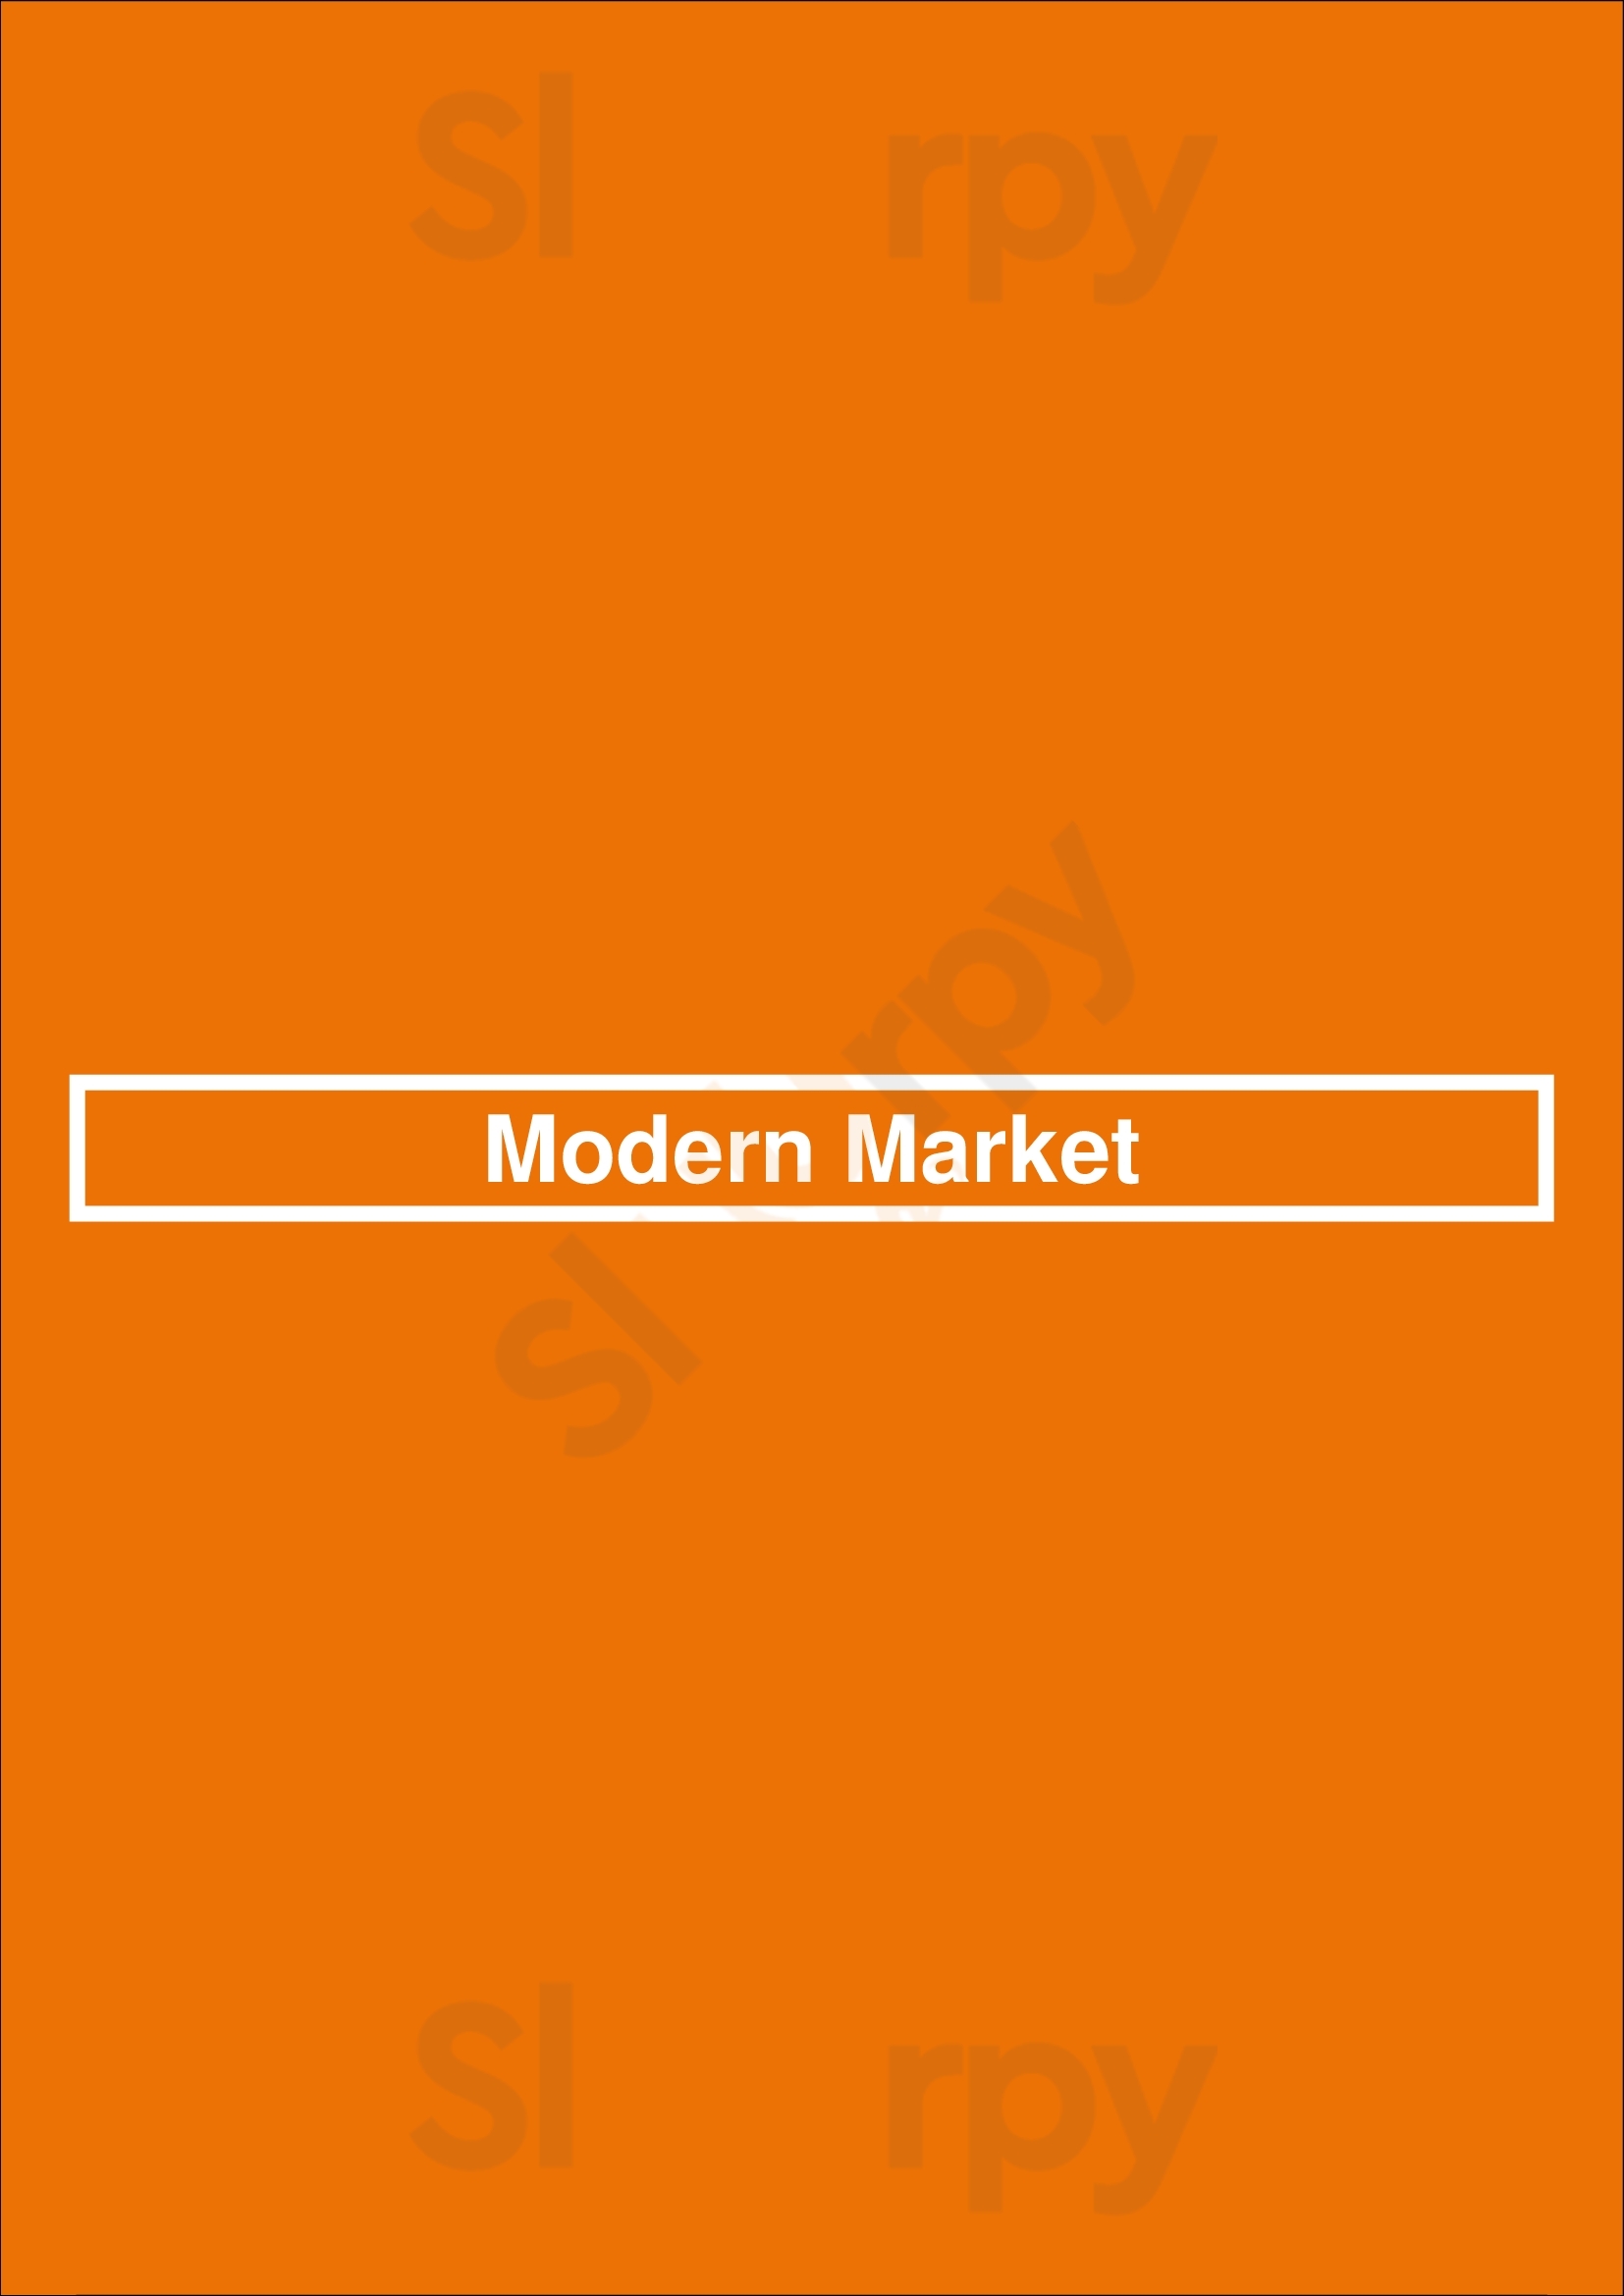 Modern Market Plano Menu - 1